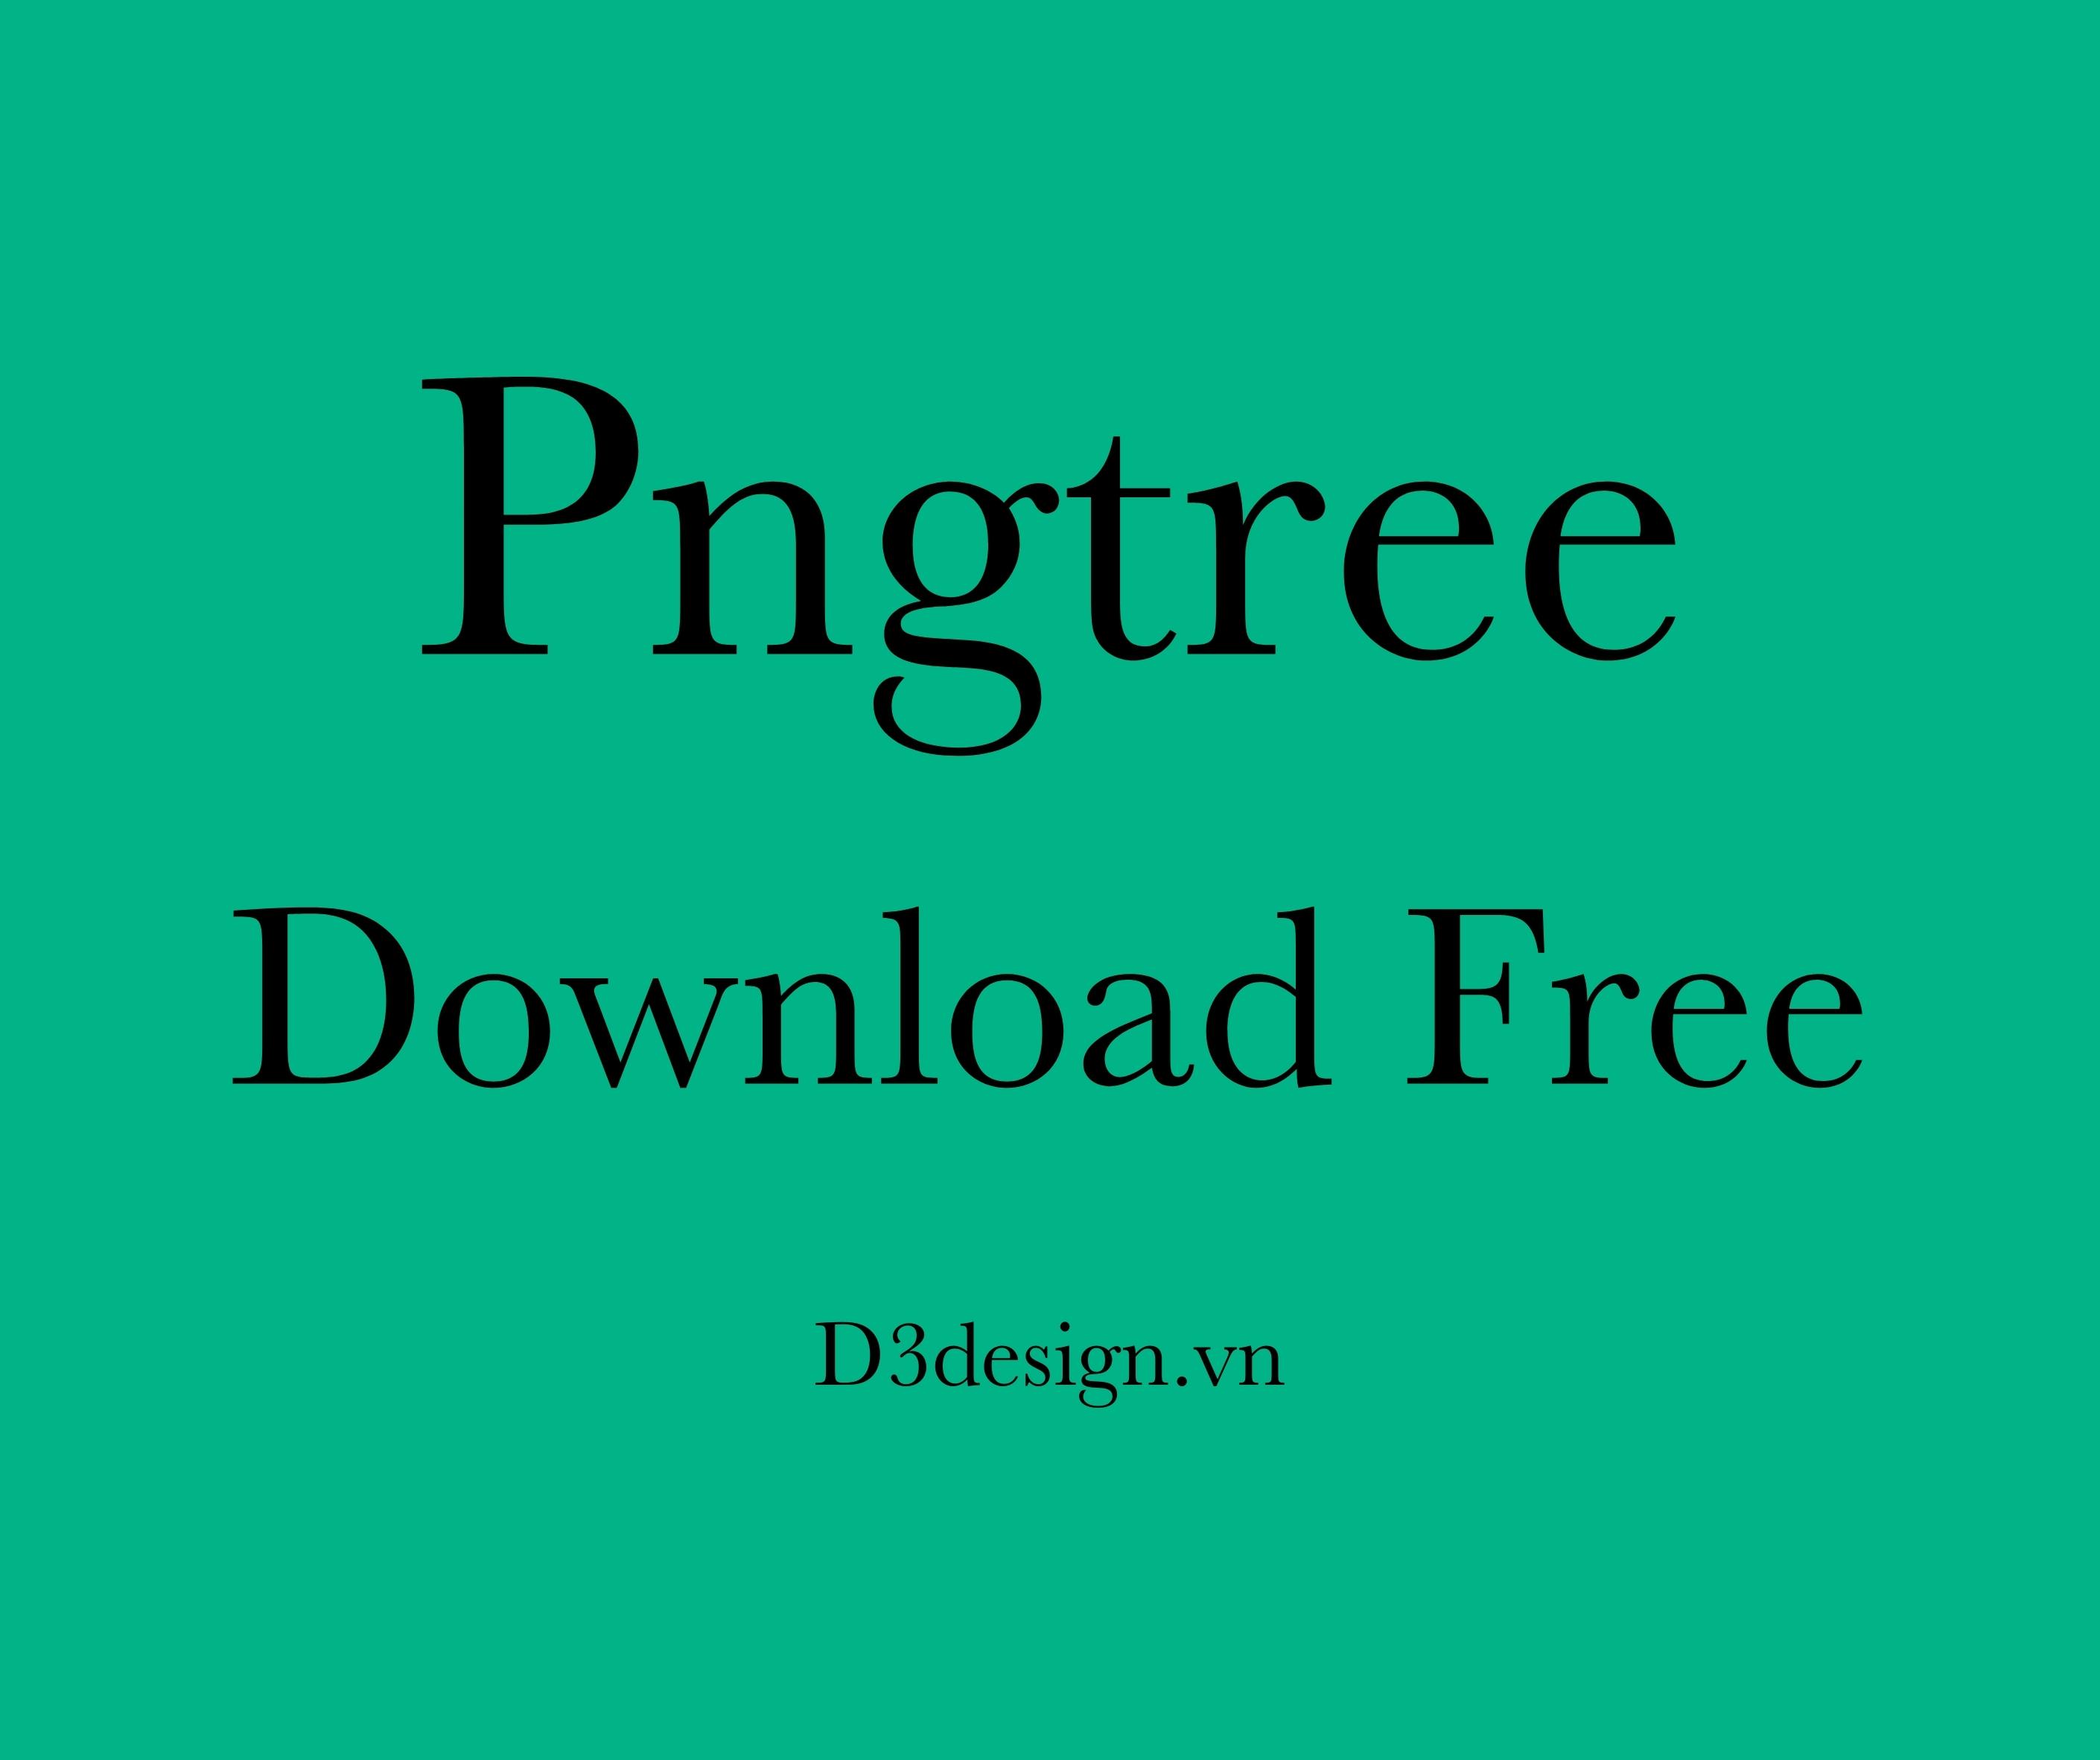 Tải File Pngtree Miễn Phí - Download File Pngtree Free